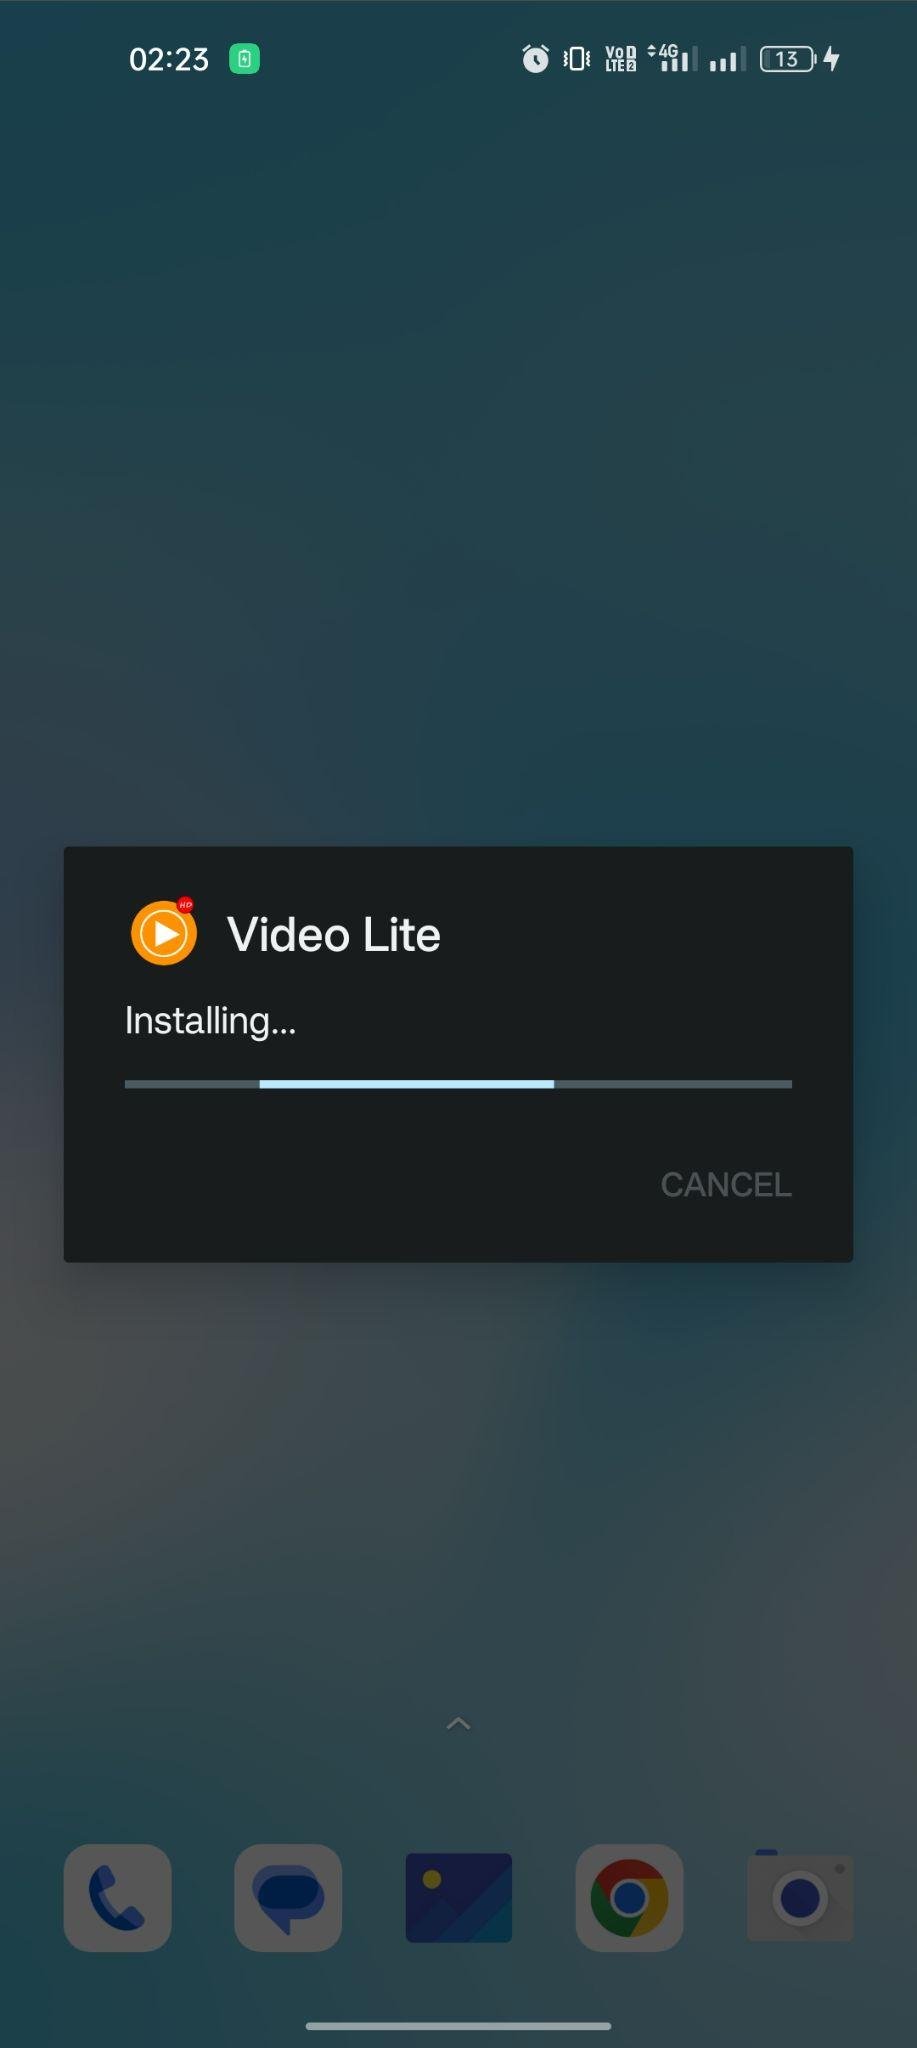 Video Lite apk installing